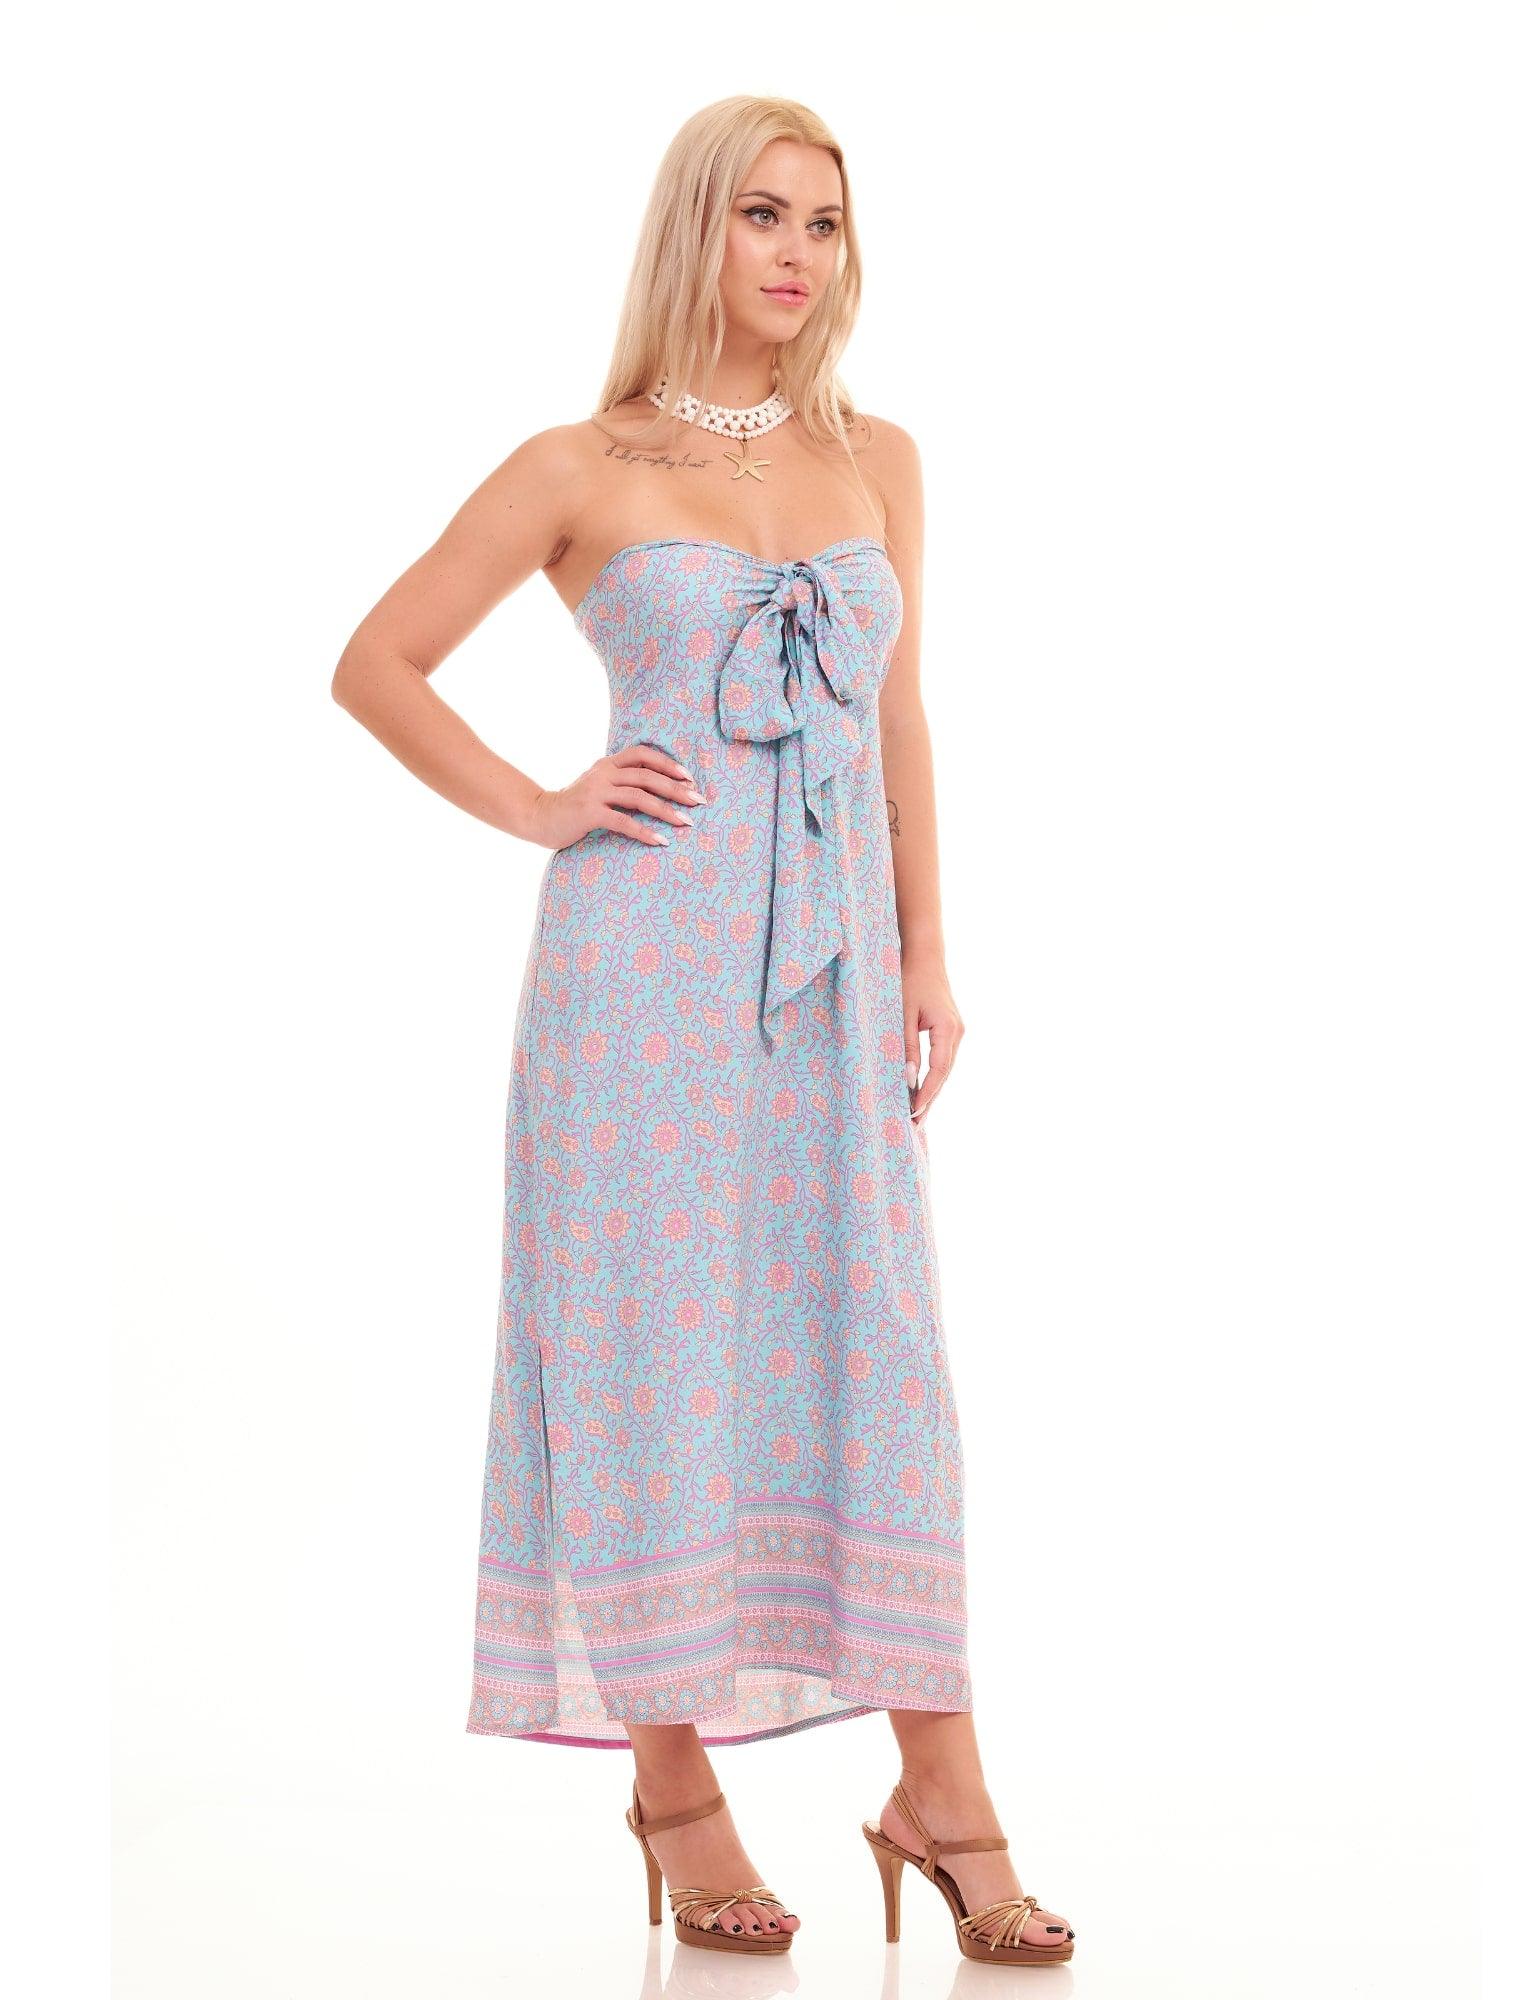 AMALFI DRESS - BLUE FLORAL - Woman Dress - Acqua Bonita